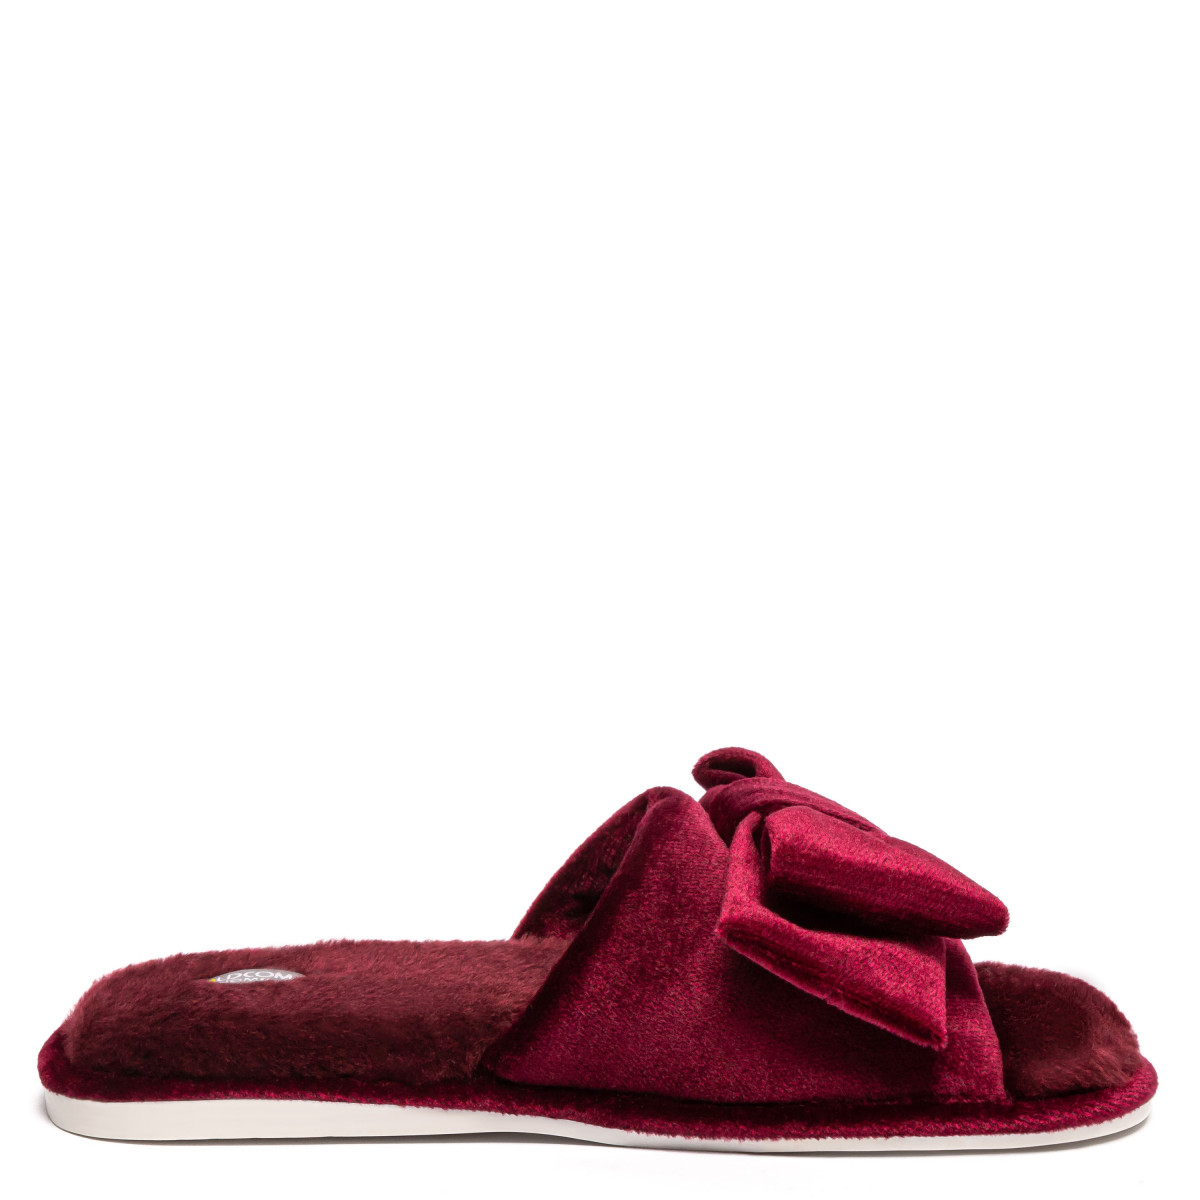 Women's Home slippers CHARM, Burgundy